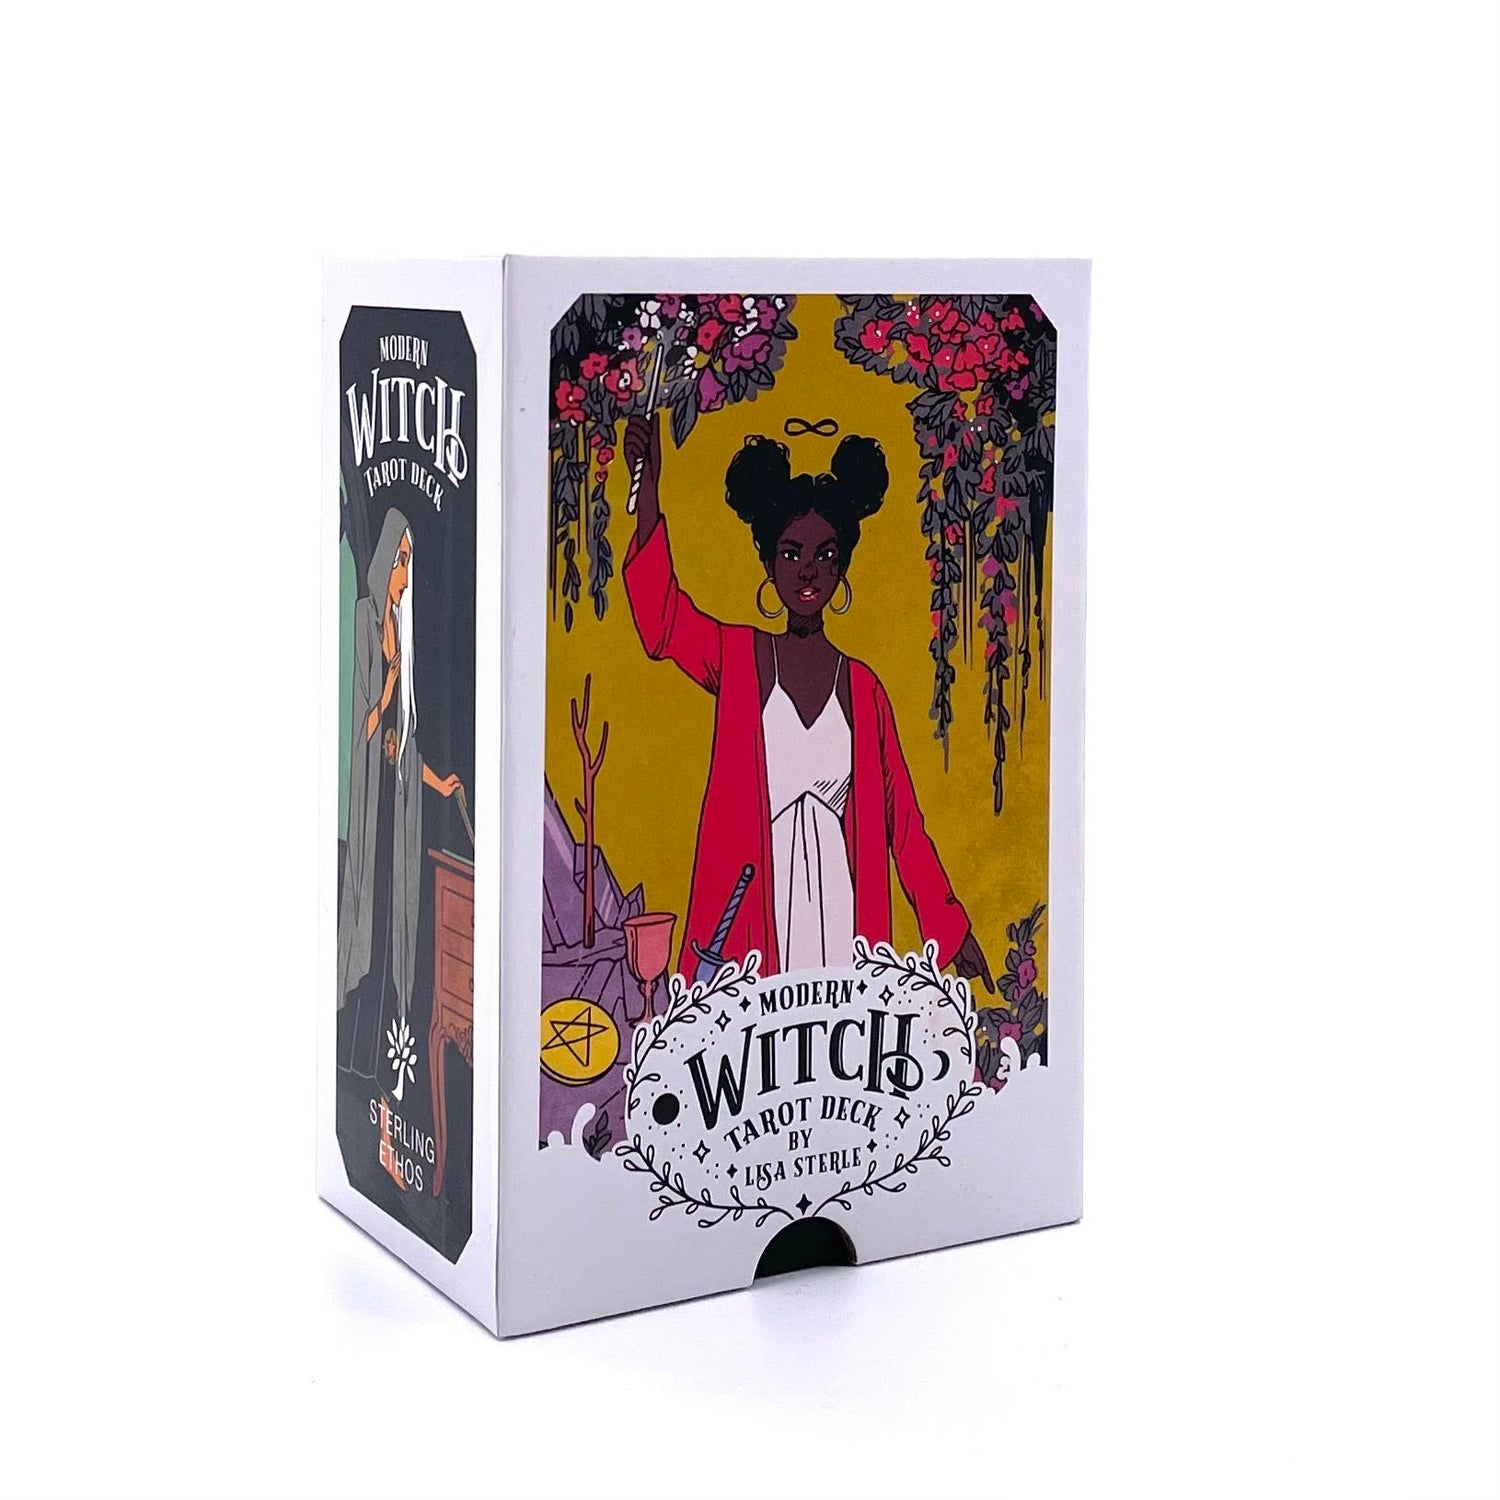 Box cover art of the Modern Witch Tarot deck.